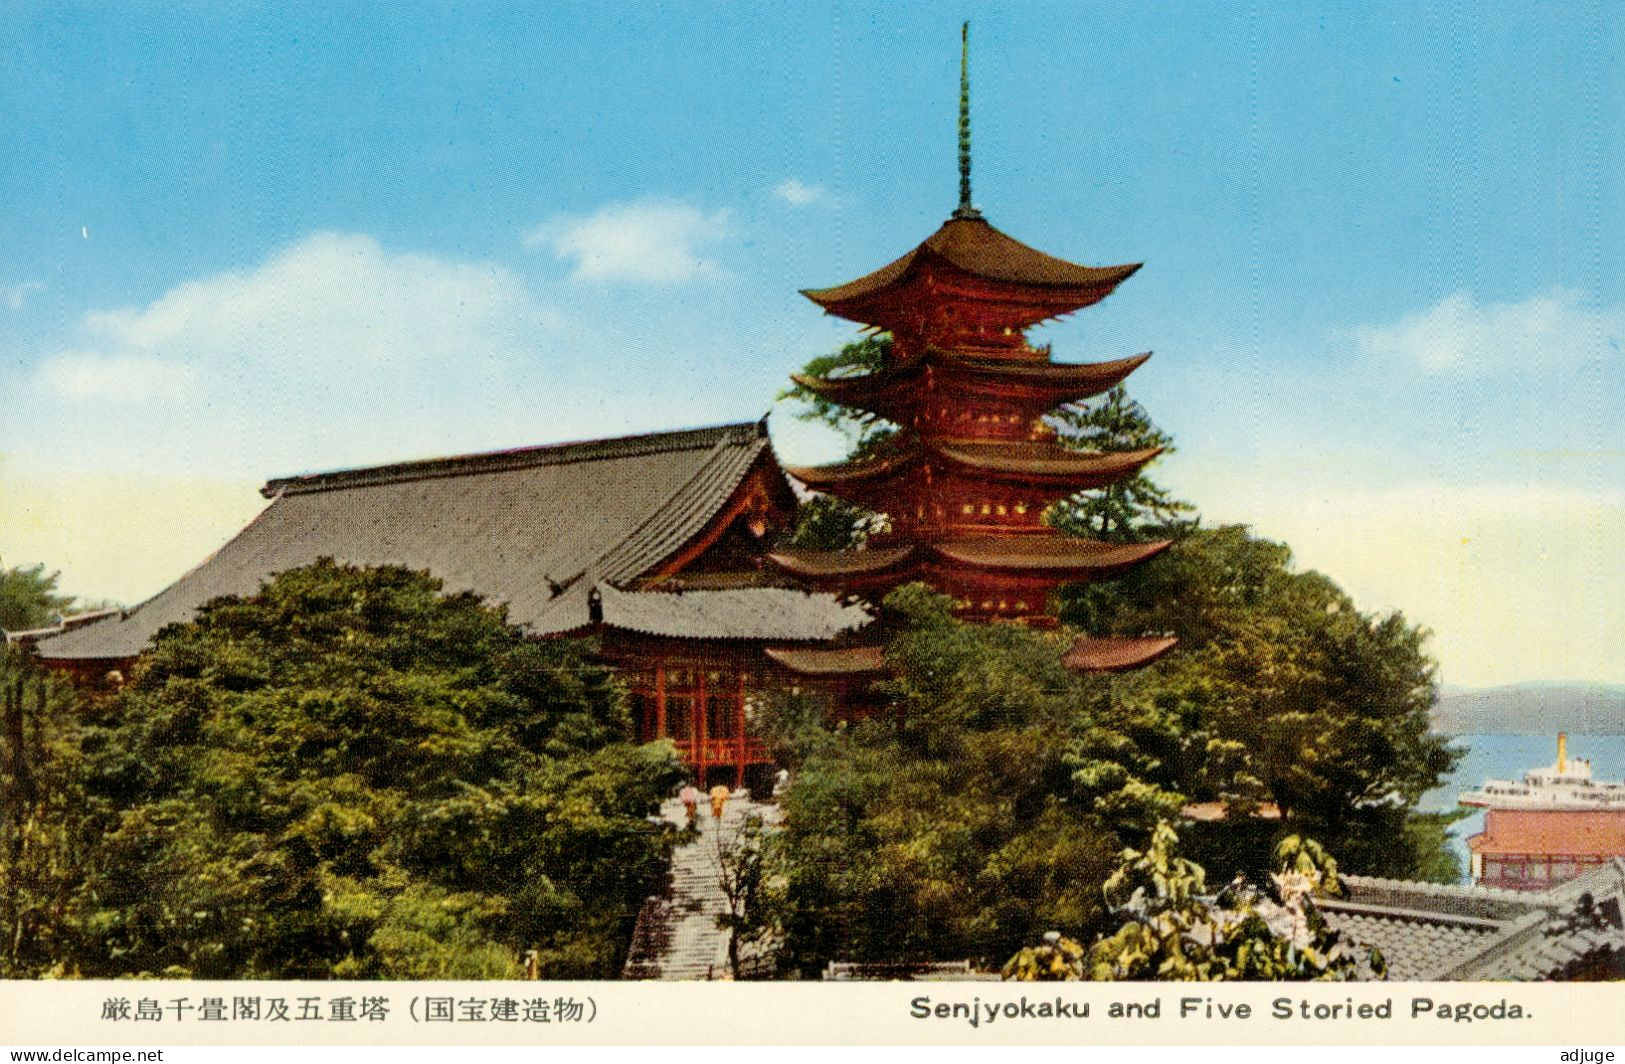 Japon- Lot de 8 cartes Miyajima Itsukushima : Le torii "flottant" du sanctuaire Itsukushima etc..